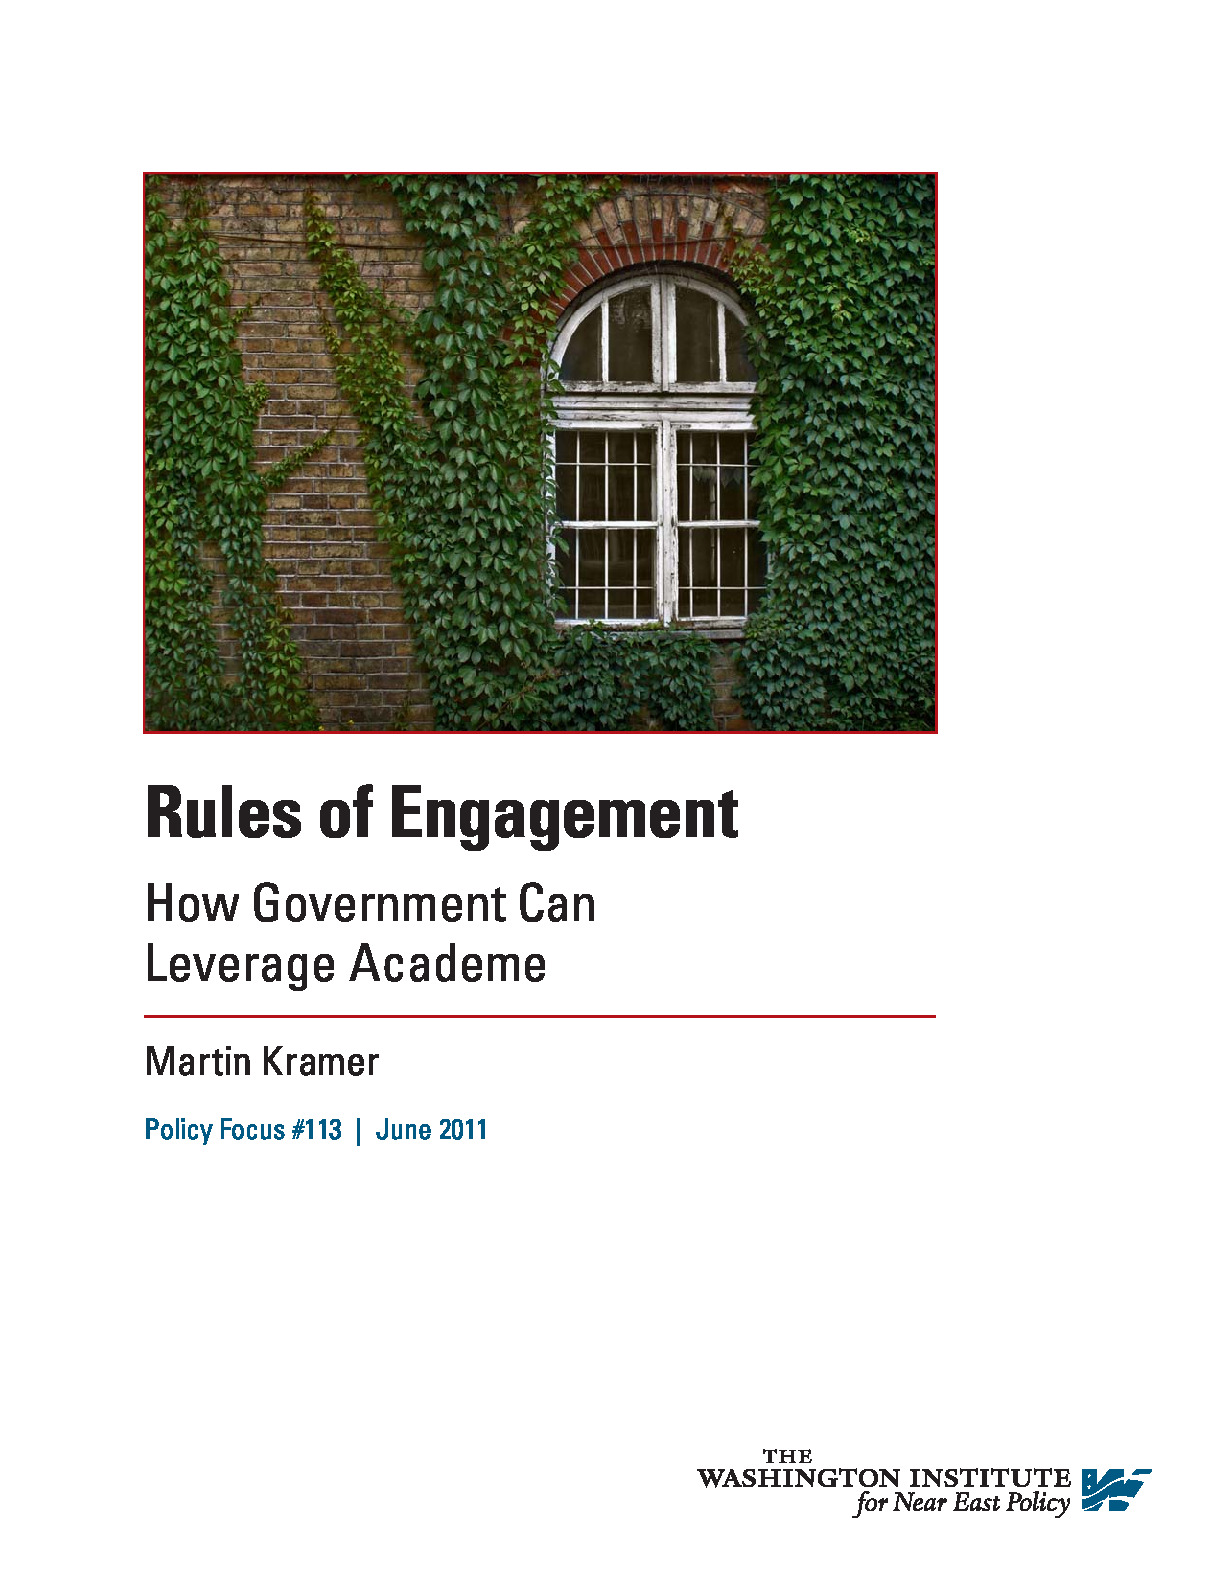 PolicyFocus113.pdf